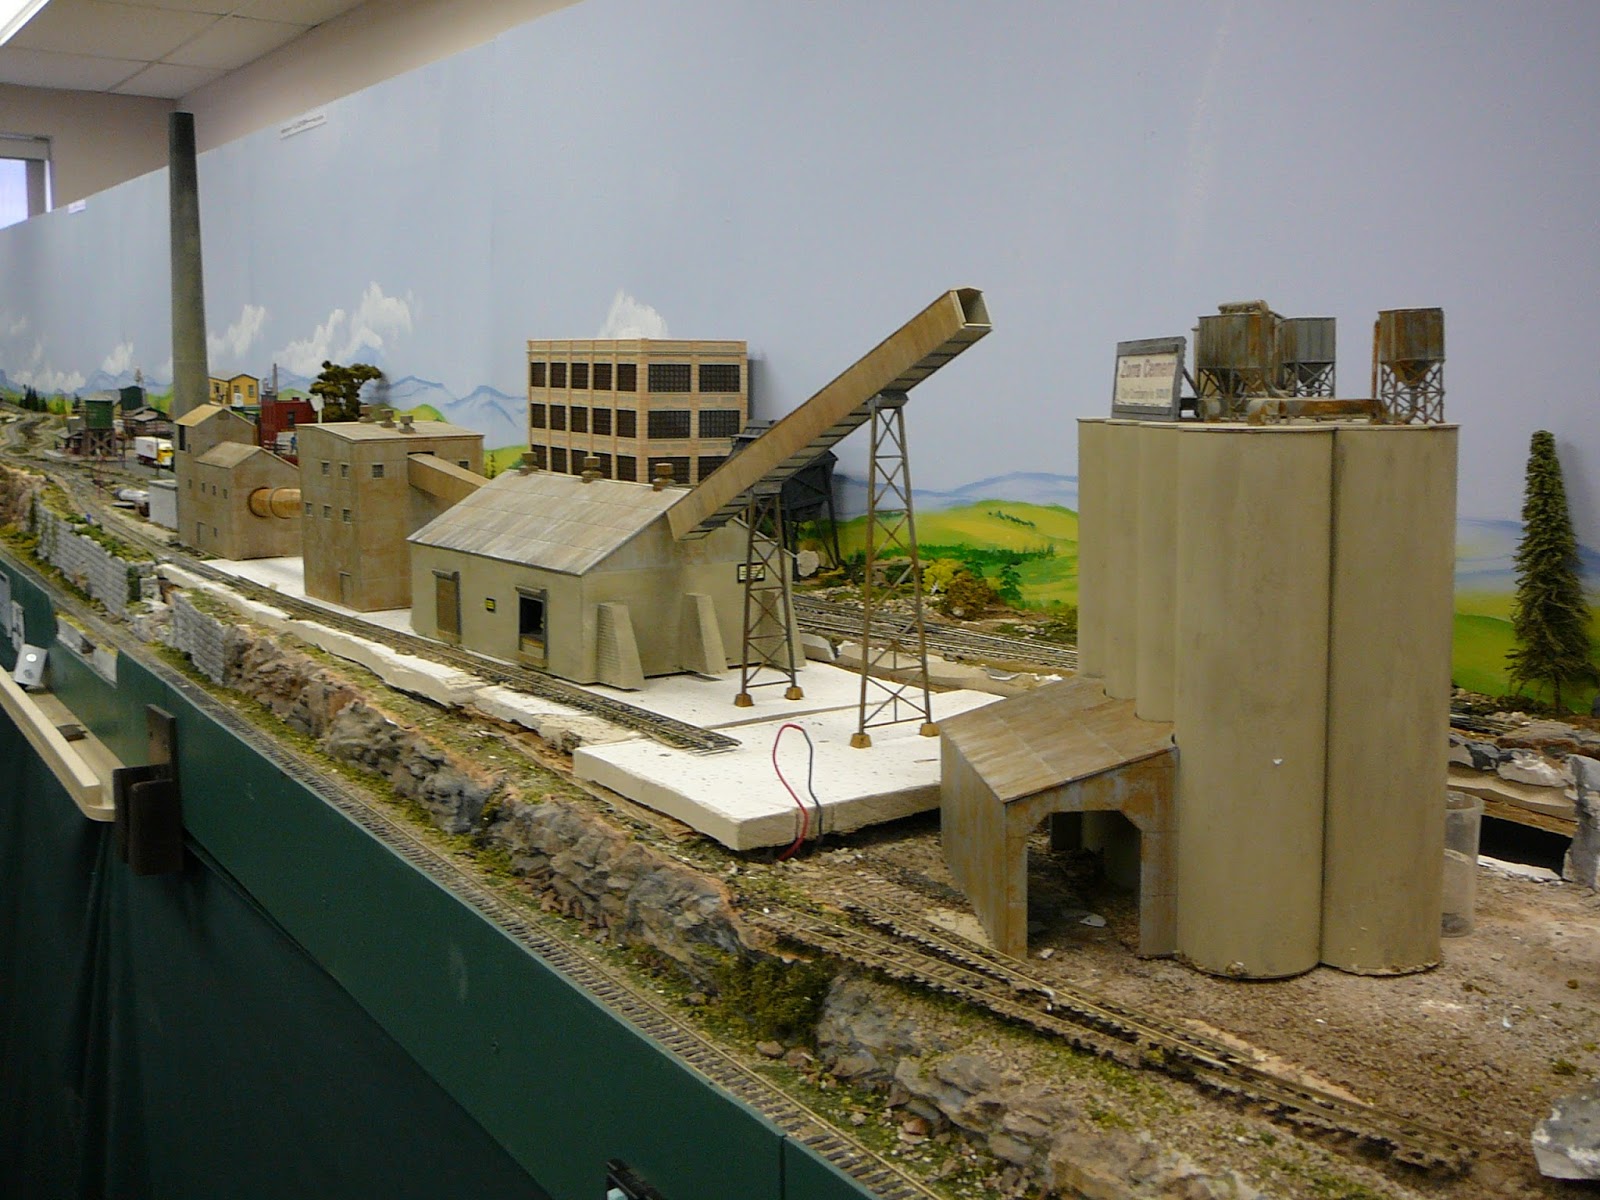 Woodstock Model Railroad: Sunday Fun Cement Plant